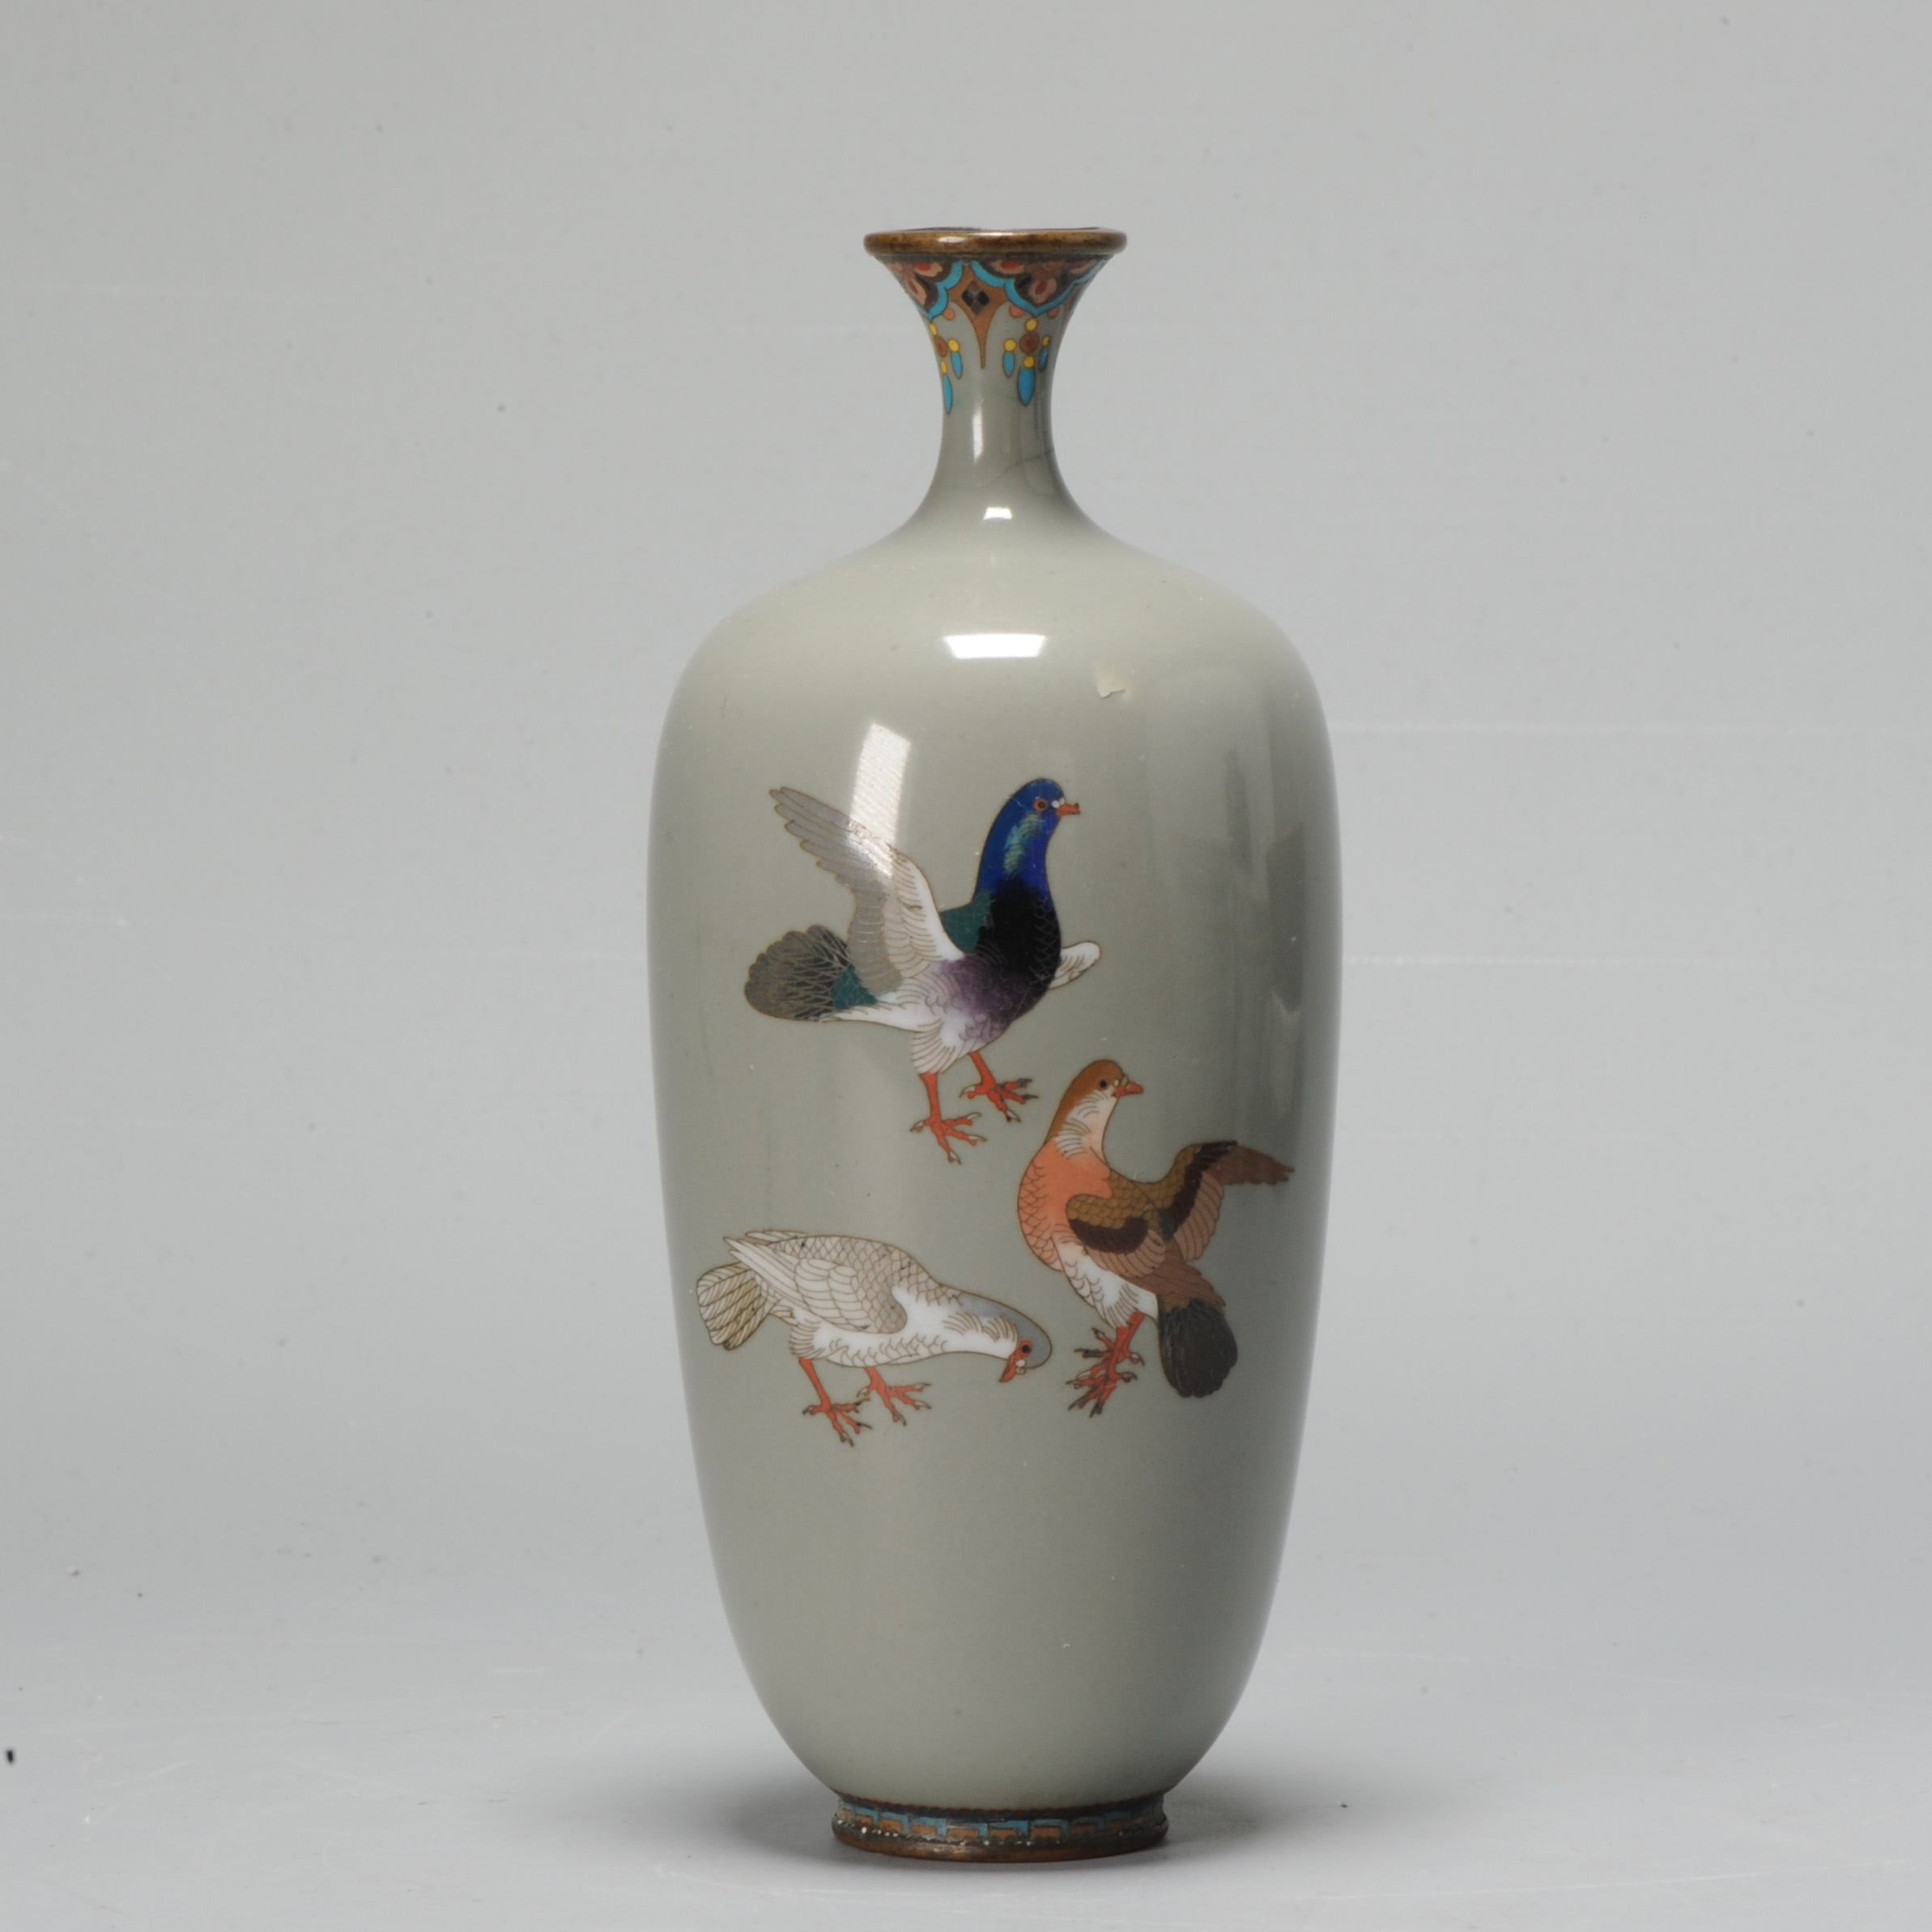 A Small Vase with Birds Dove Pigeon cloisonné enamel Meiji period (1868-1912)